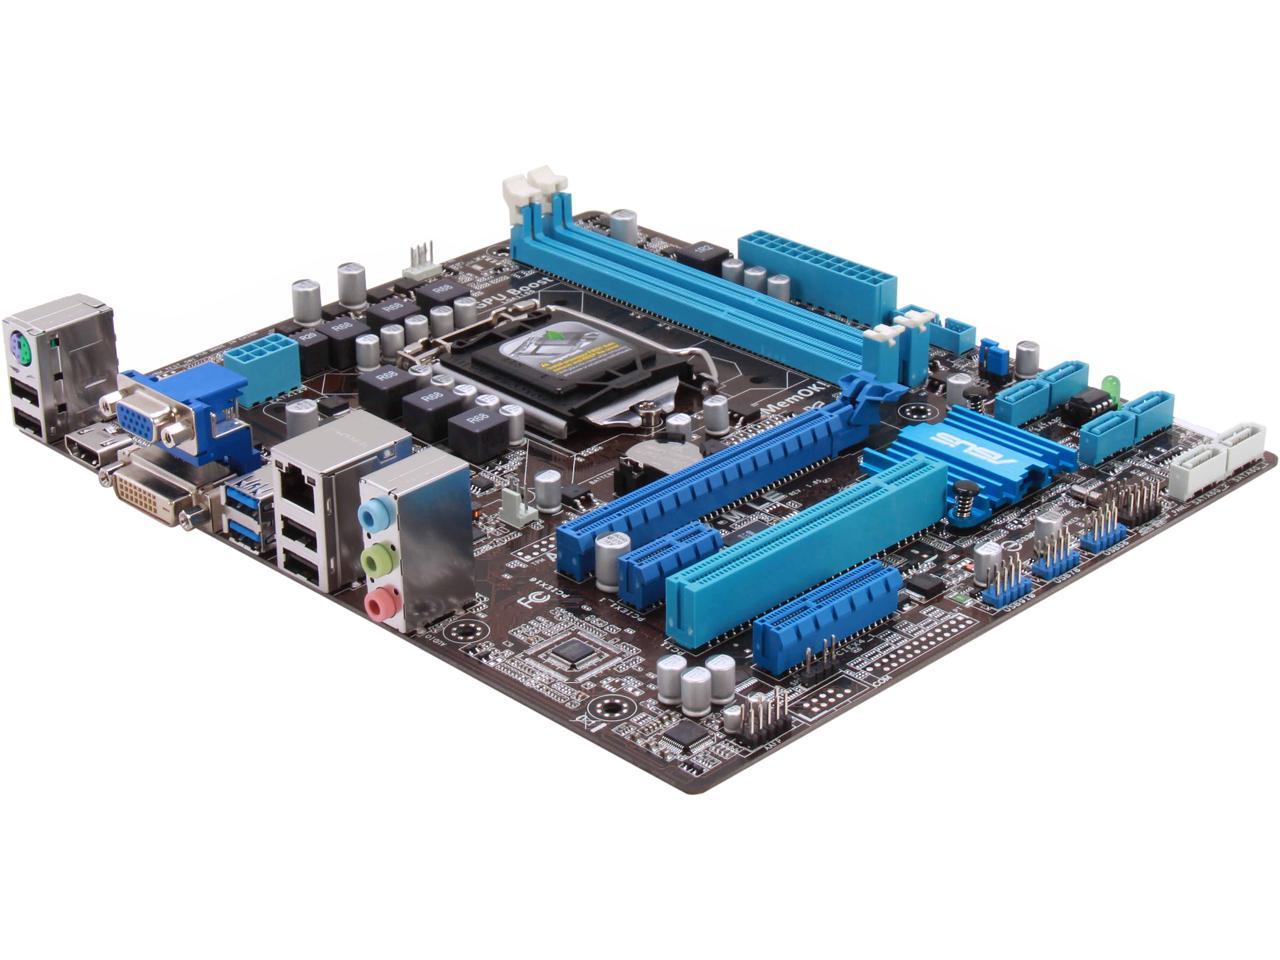 ASUS P8H77-M LE LGA 1155 Intel H77 HDMI SATA 6Gb/s USB 3.0 uATX Intel  Motherboard with UEFI BIOS